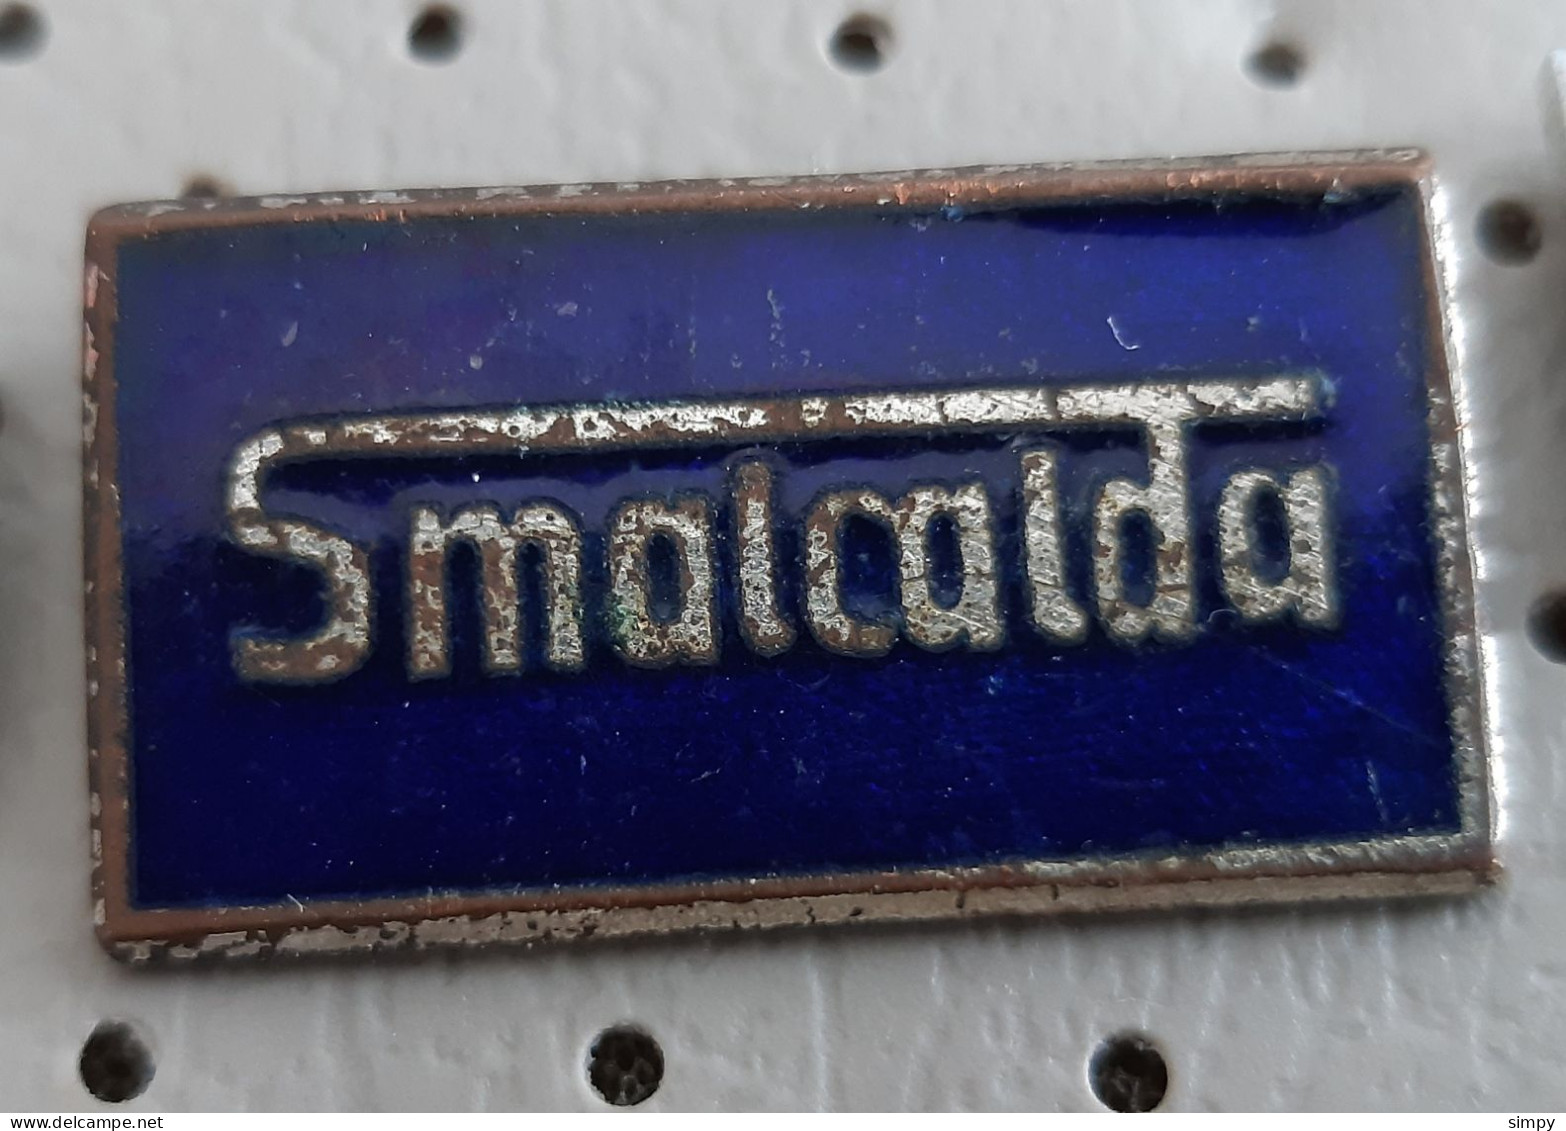 SMALCADA Tools  Germany DDR Vintage Pin - Marques